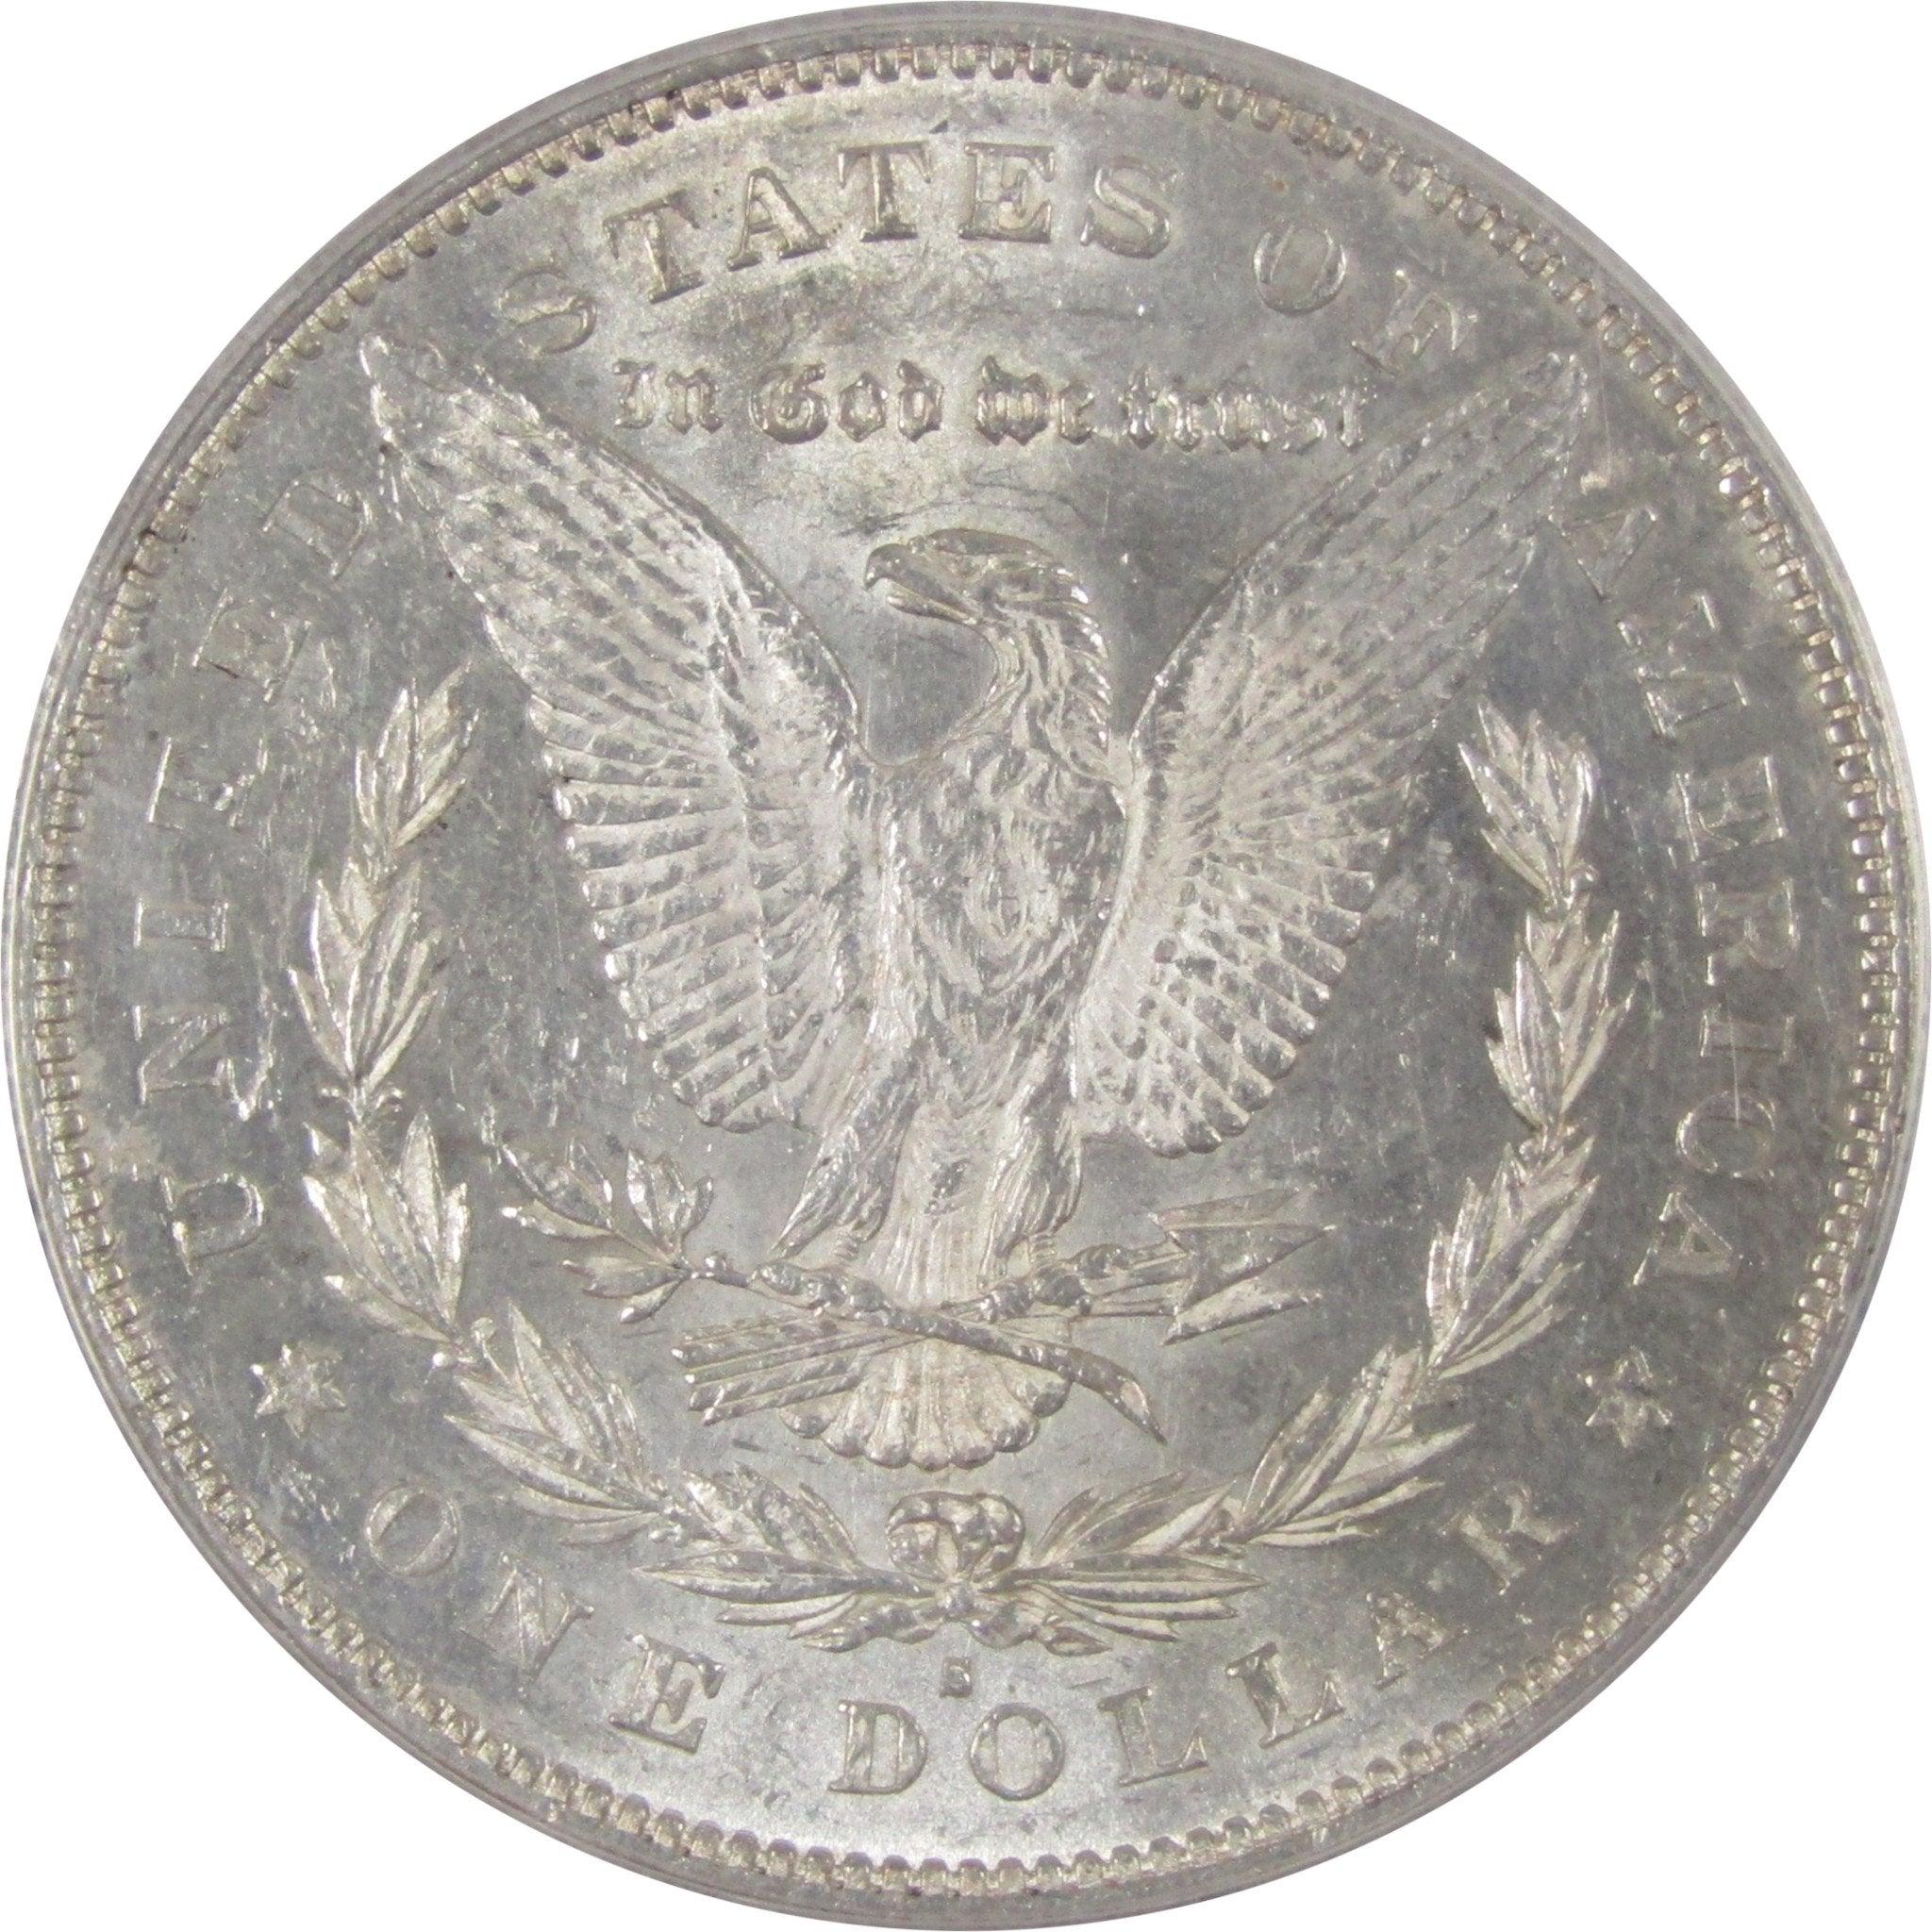 1879 S Rev 78 VAM-52 Morgan Dollar AU 58 ANACS Silver SKU:CPC1101 - Morgan coin - Morgan silver dollar - Morgan silver dollar for sale - Profile Coins &amp; Collectibles